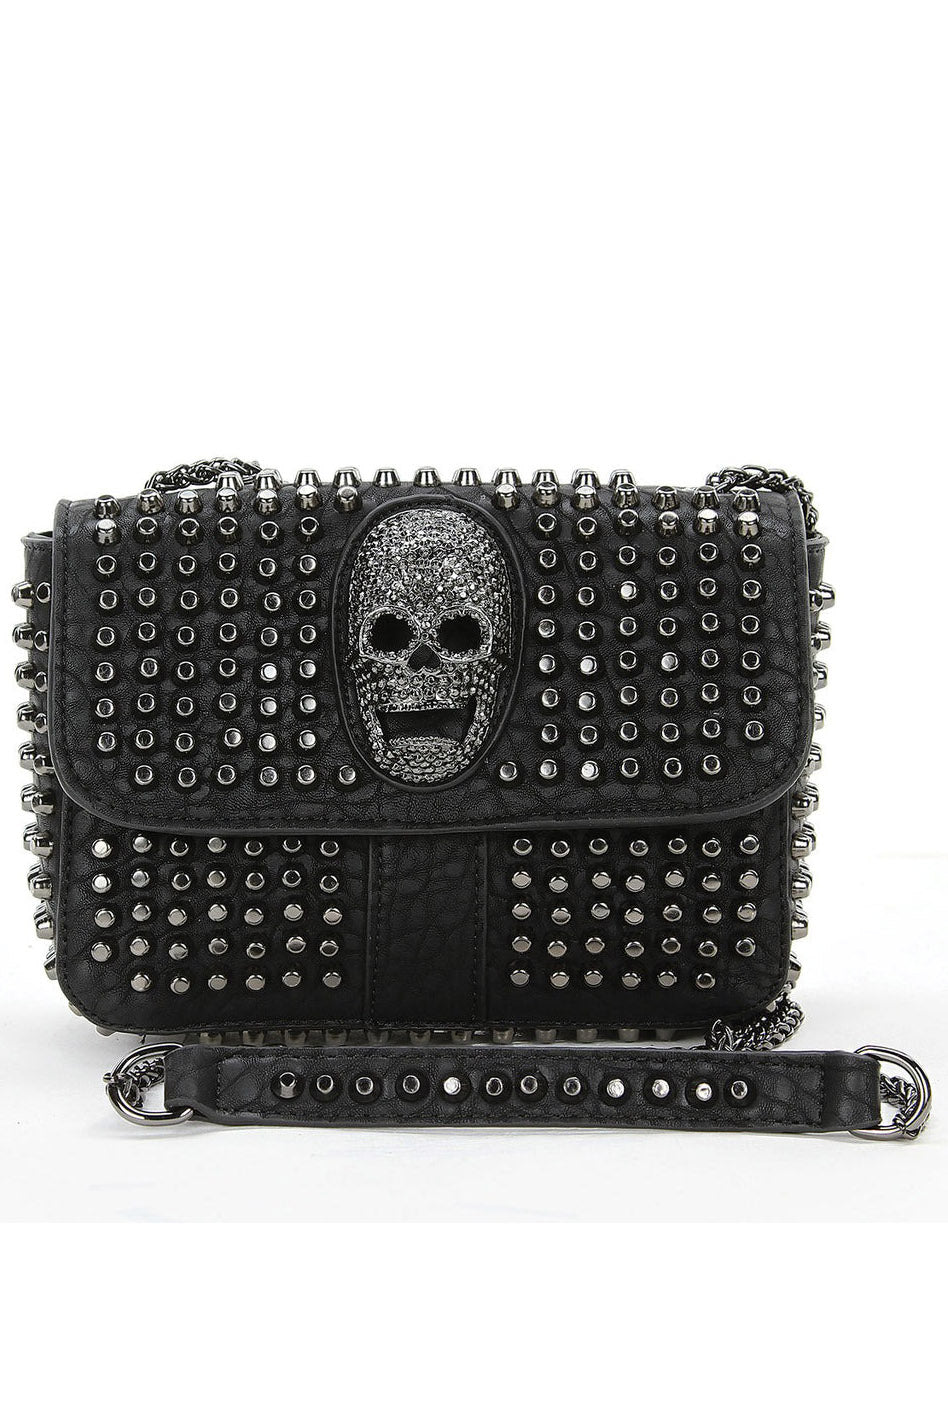 punk rock studded purse